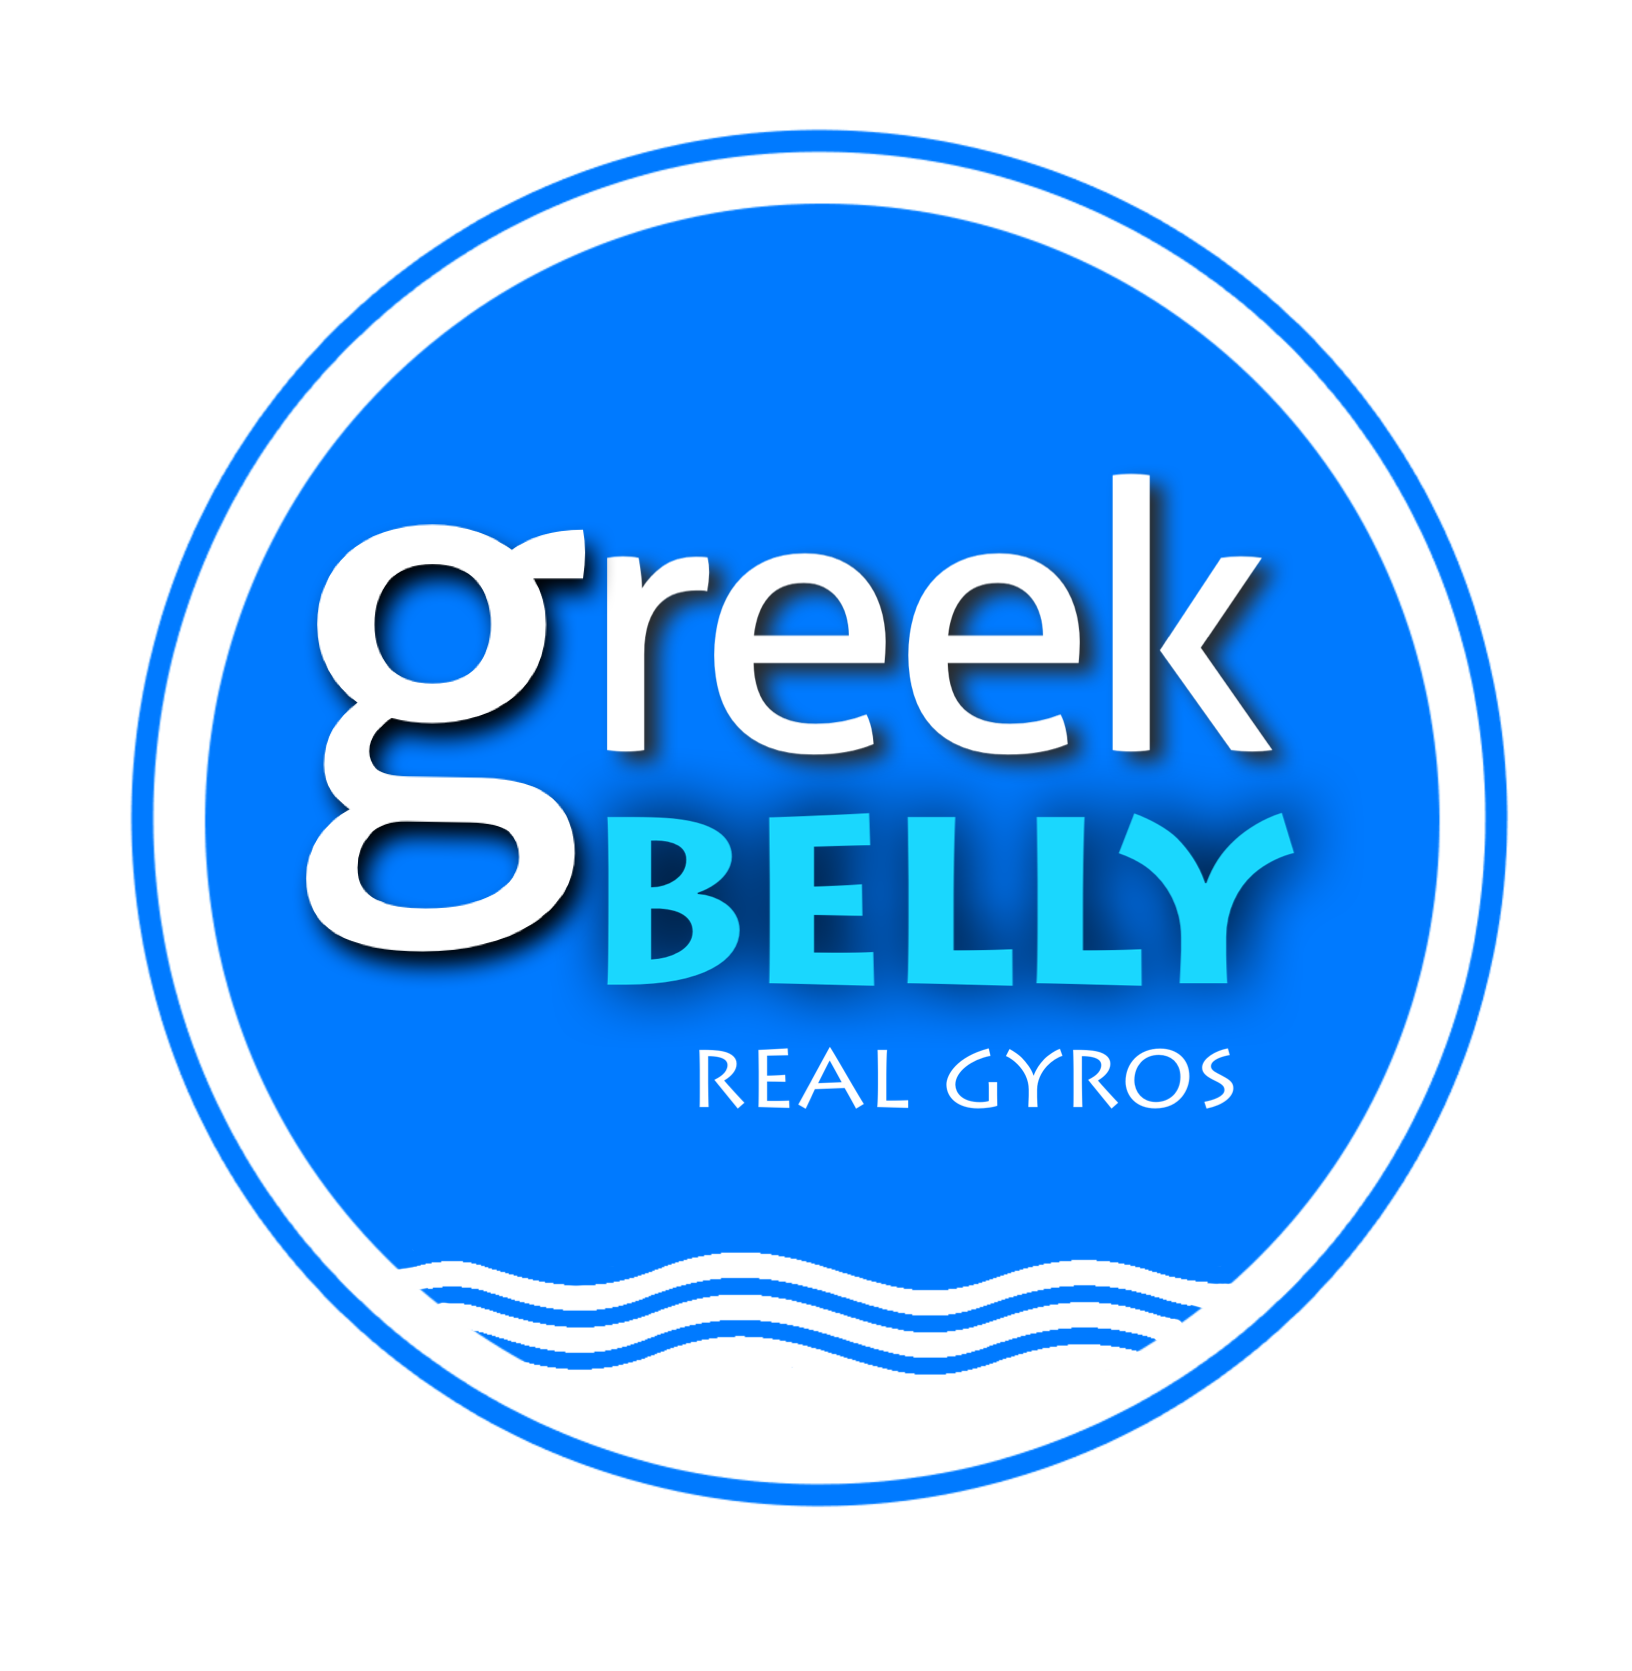 GREEK BELLY RESTAURANT